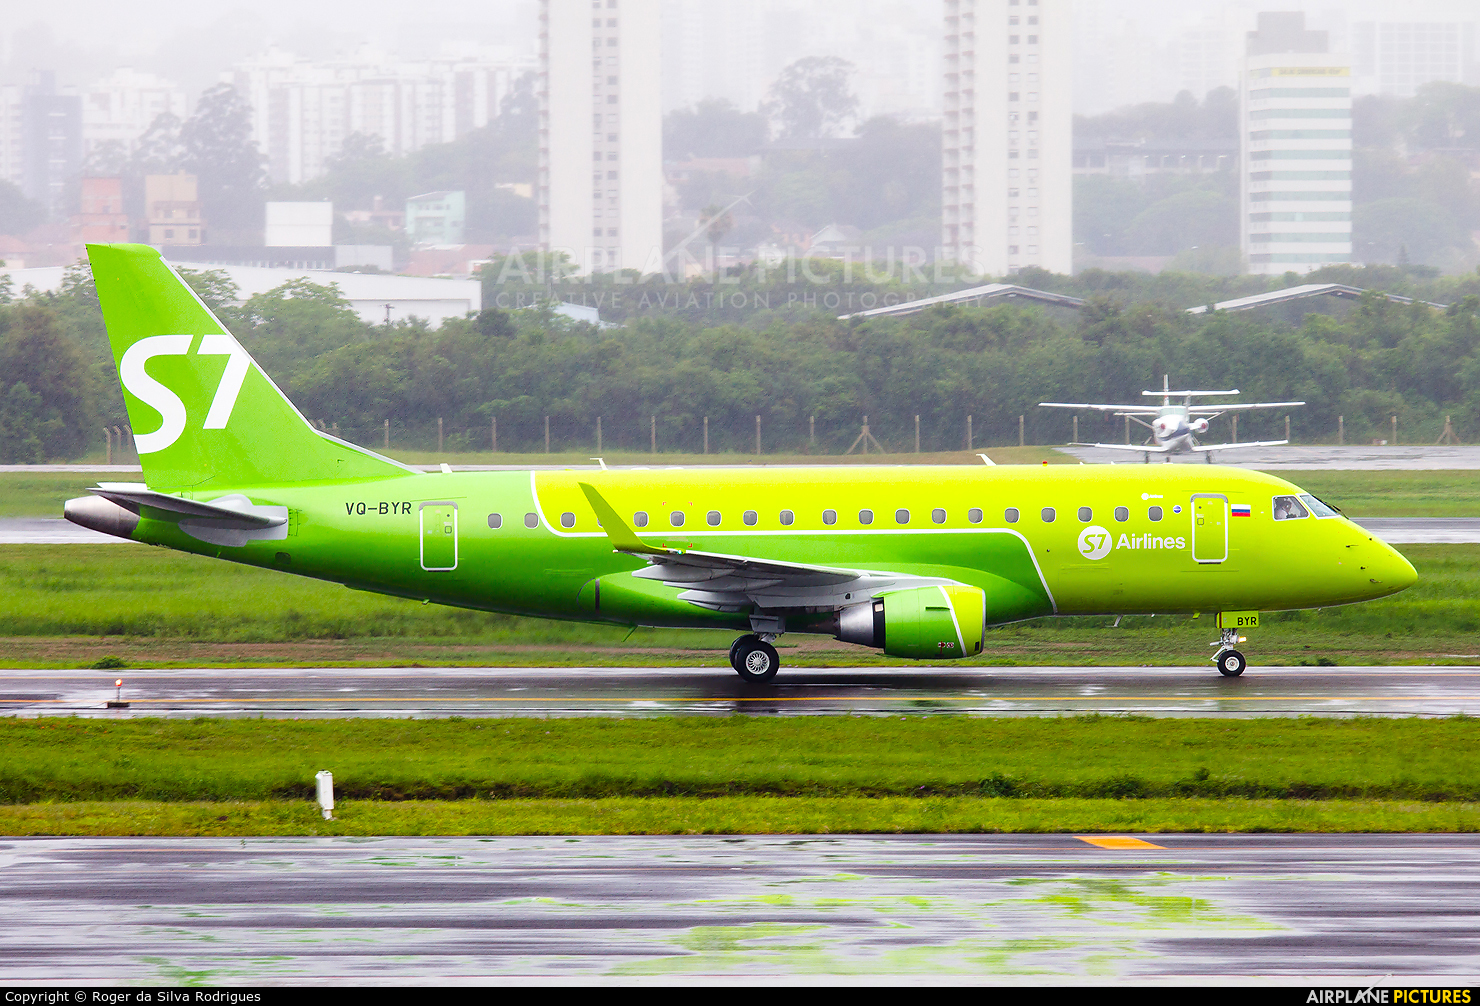 S7 Airlines VQ-BYR aircraft at Porto Alegre - Salgado Filho